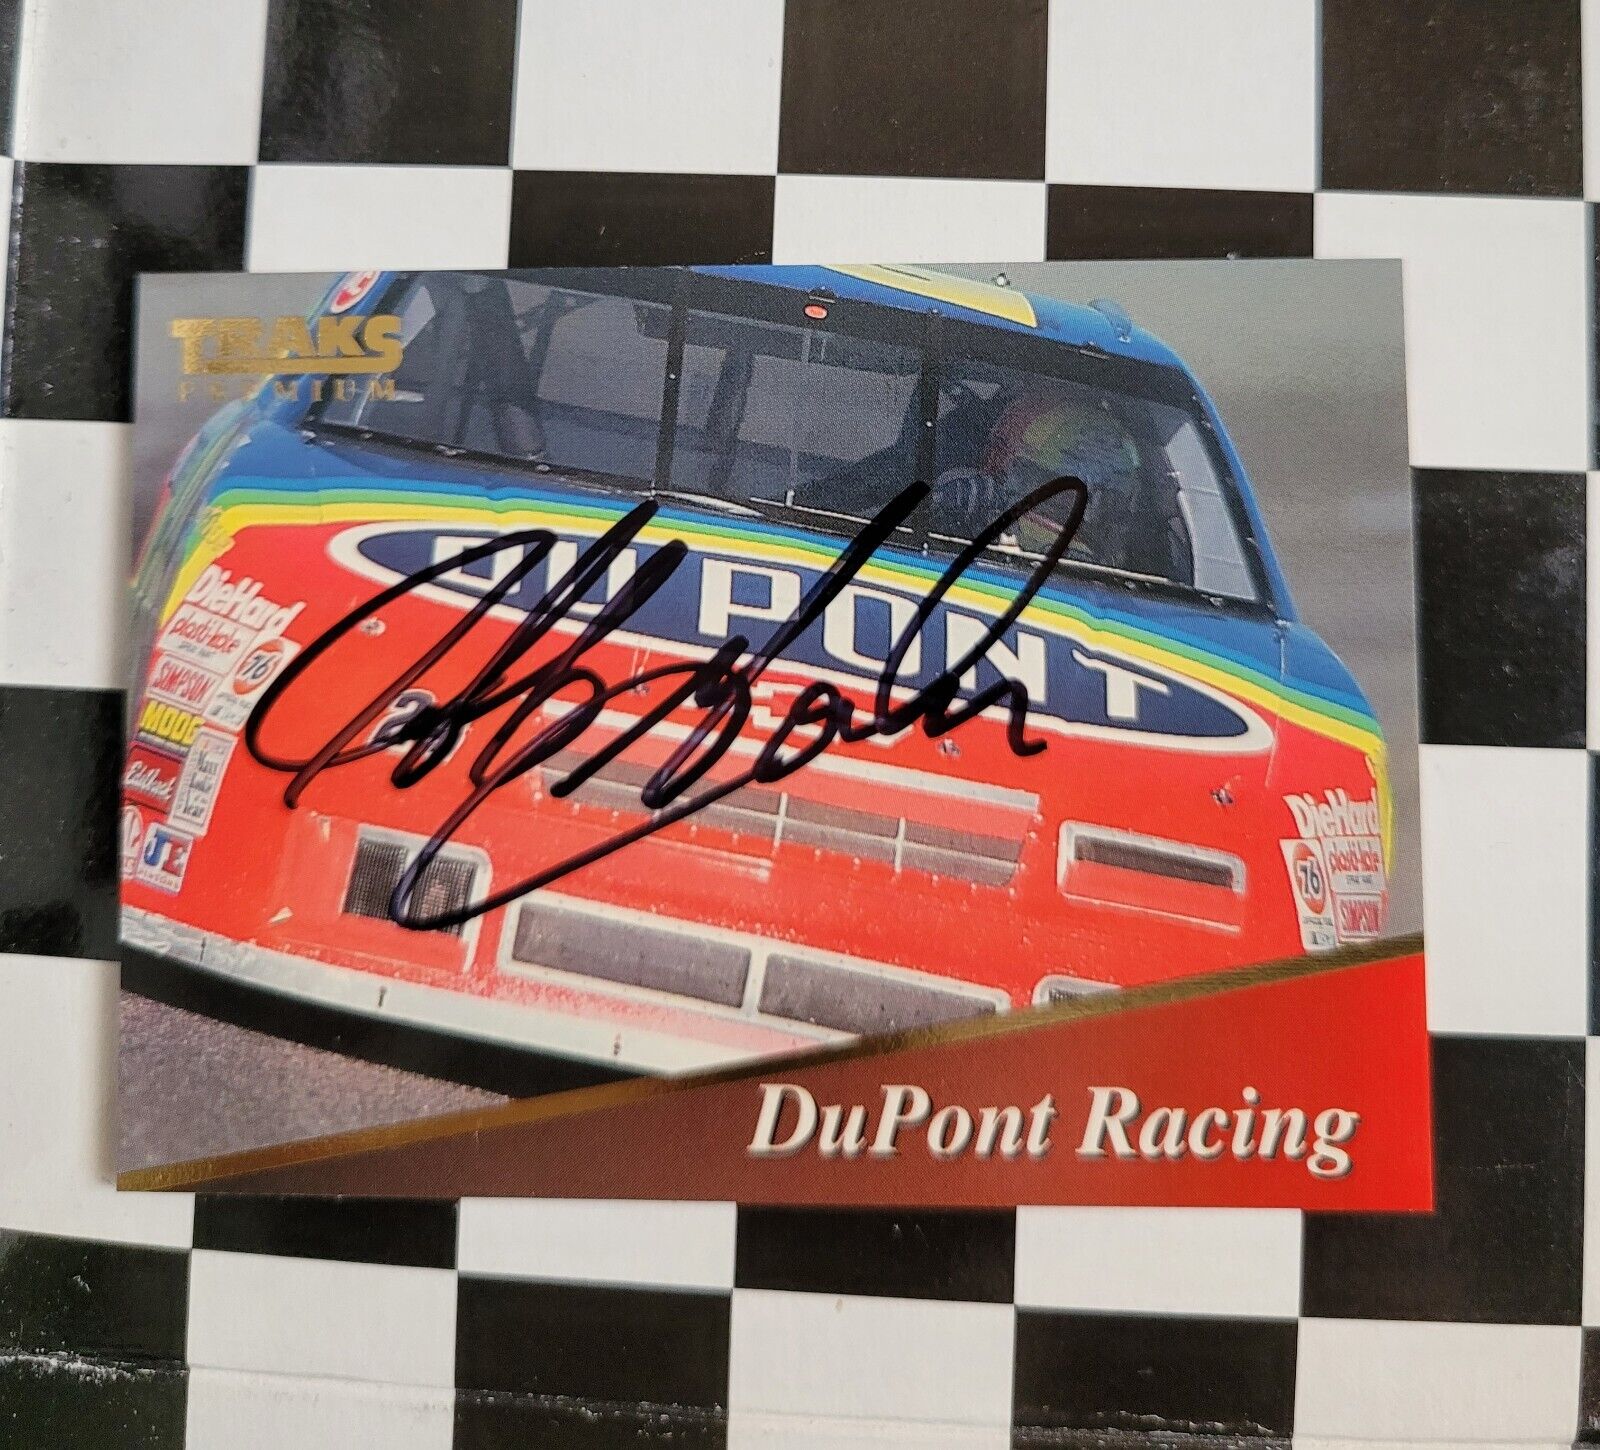 🏁🏆Jeff Gordon Autographed NASCAR Card🏁🏆